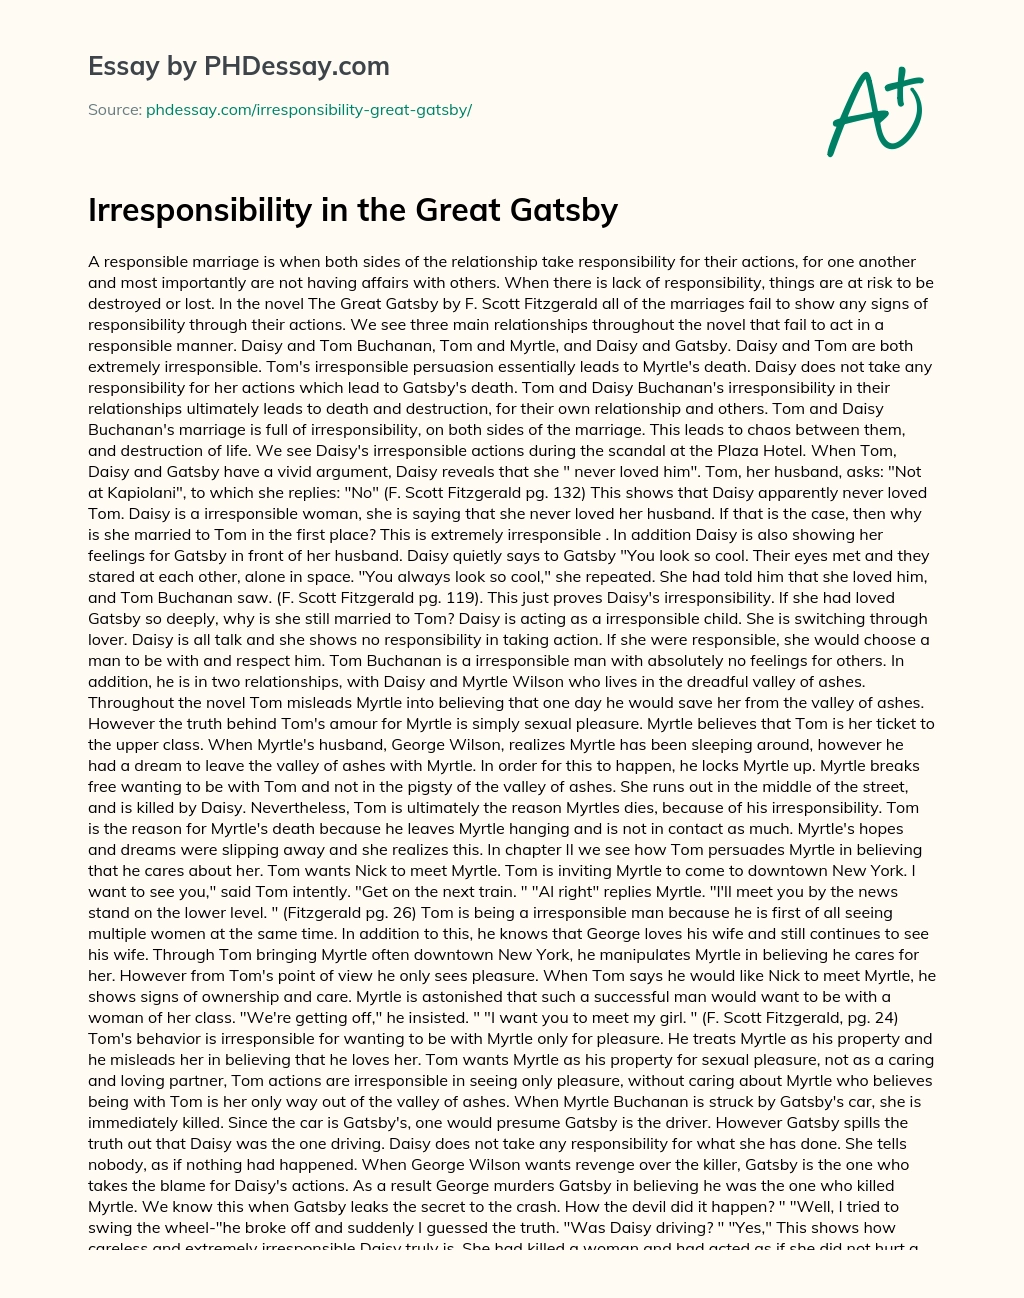 Irresponsibility in the Great Gatsby essay